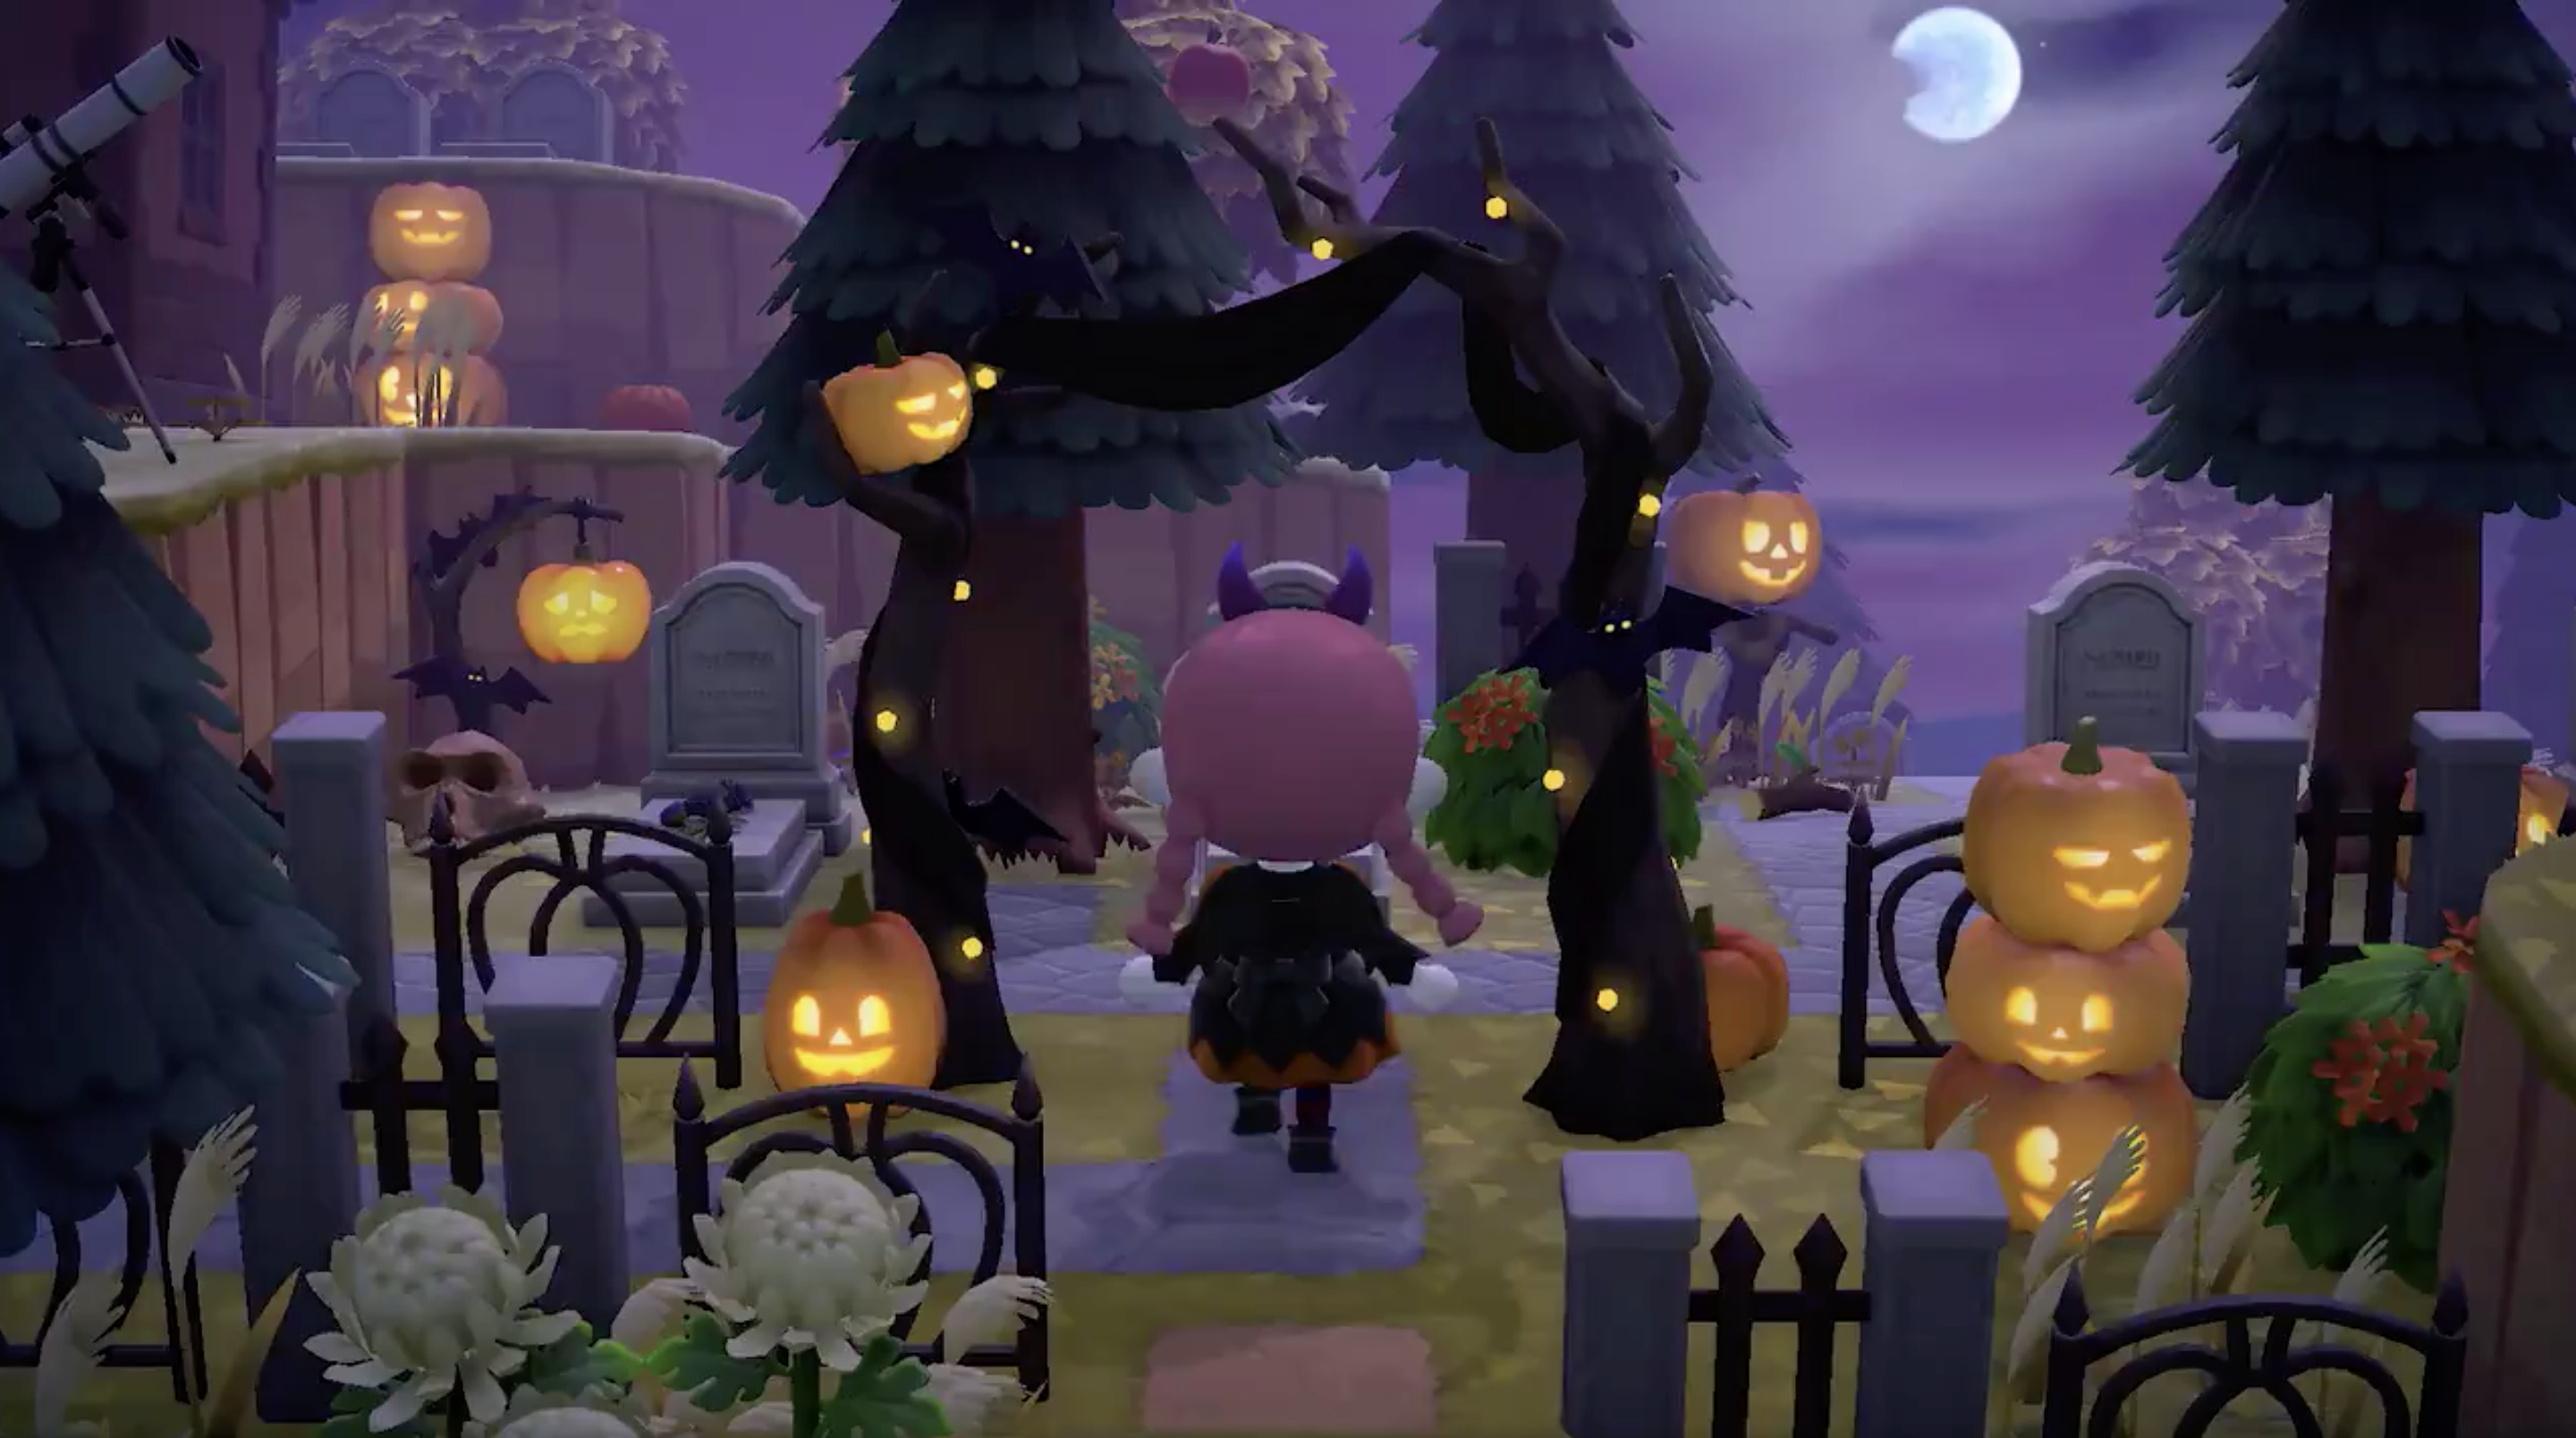 Spooky island decorations